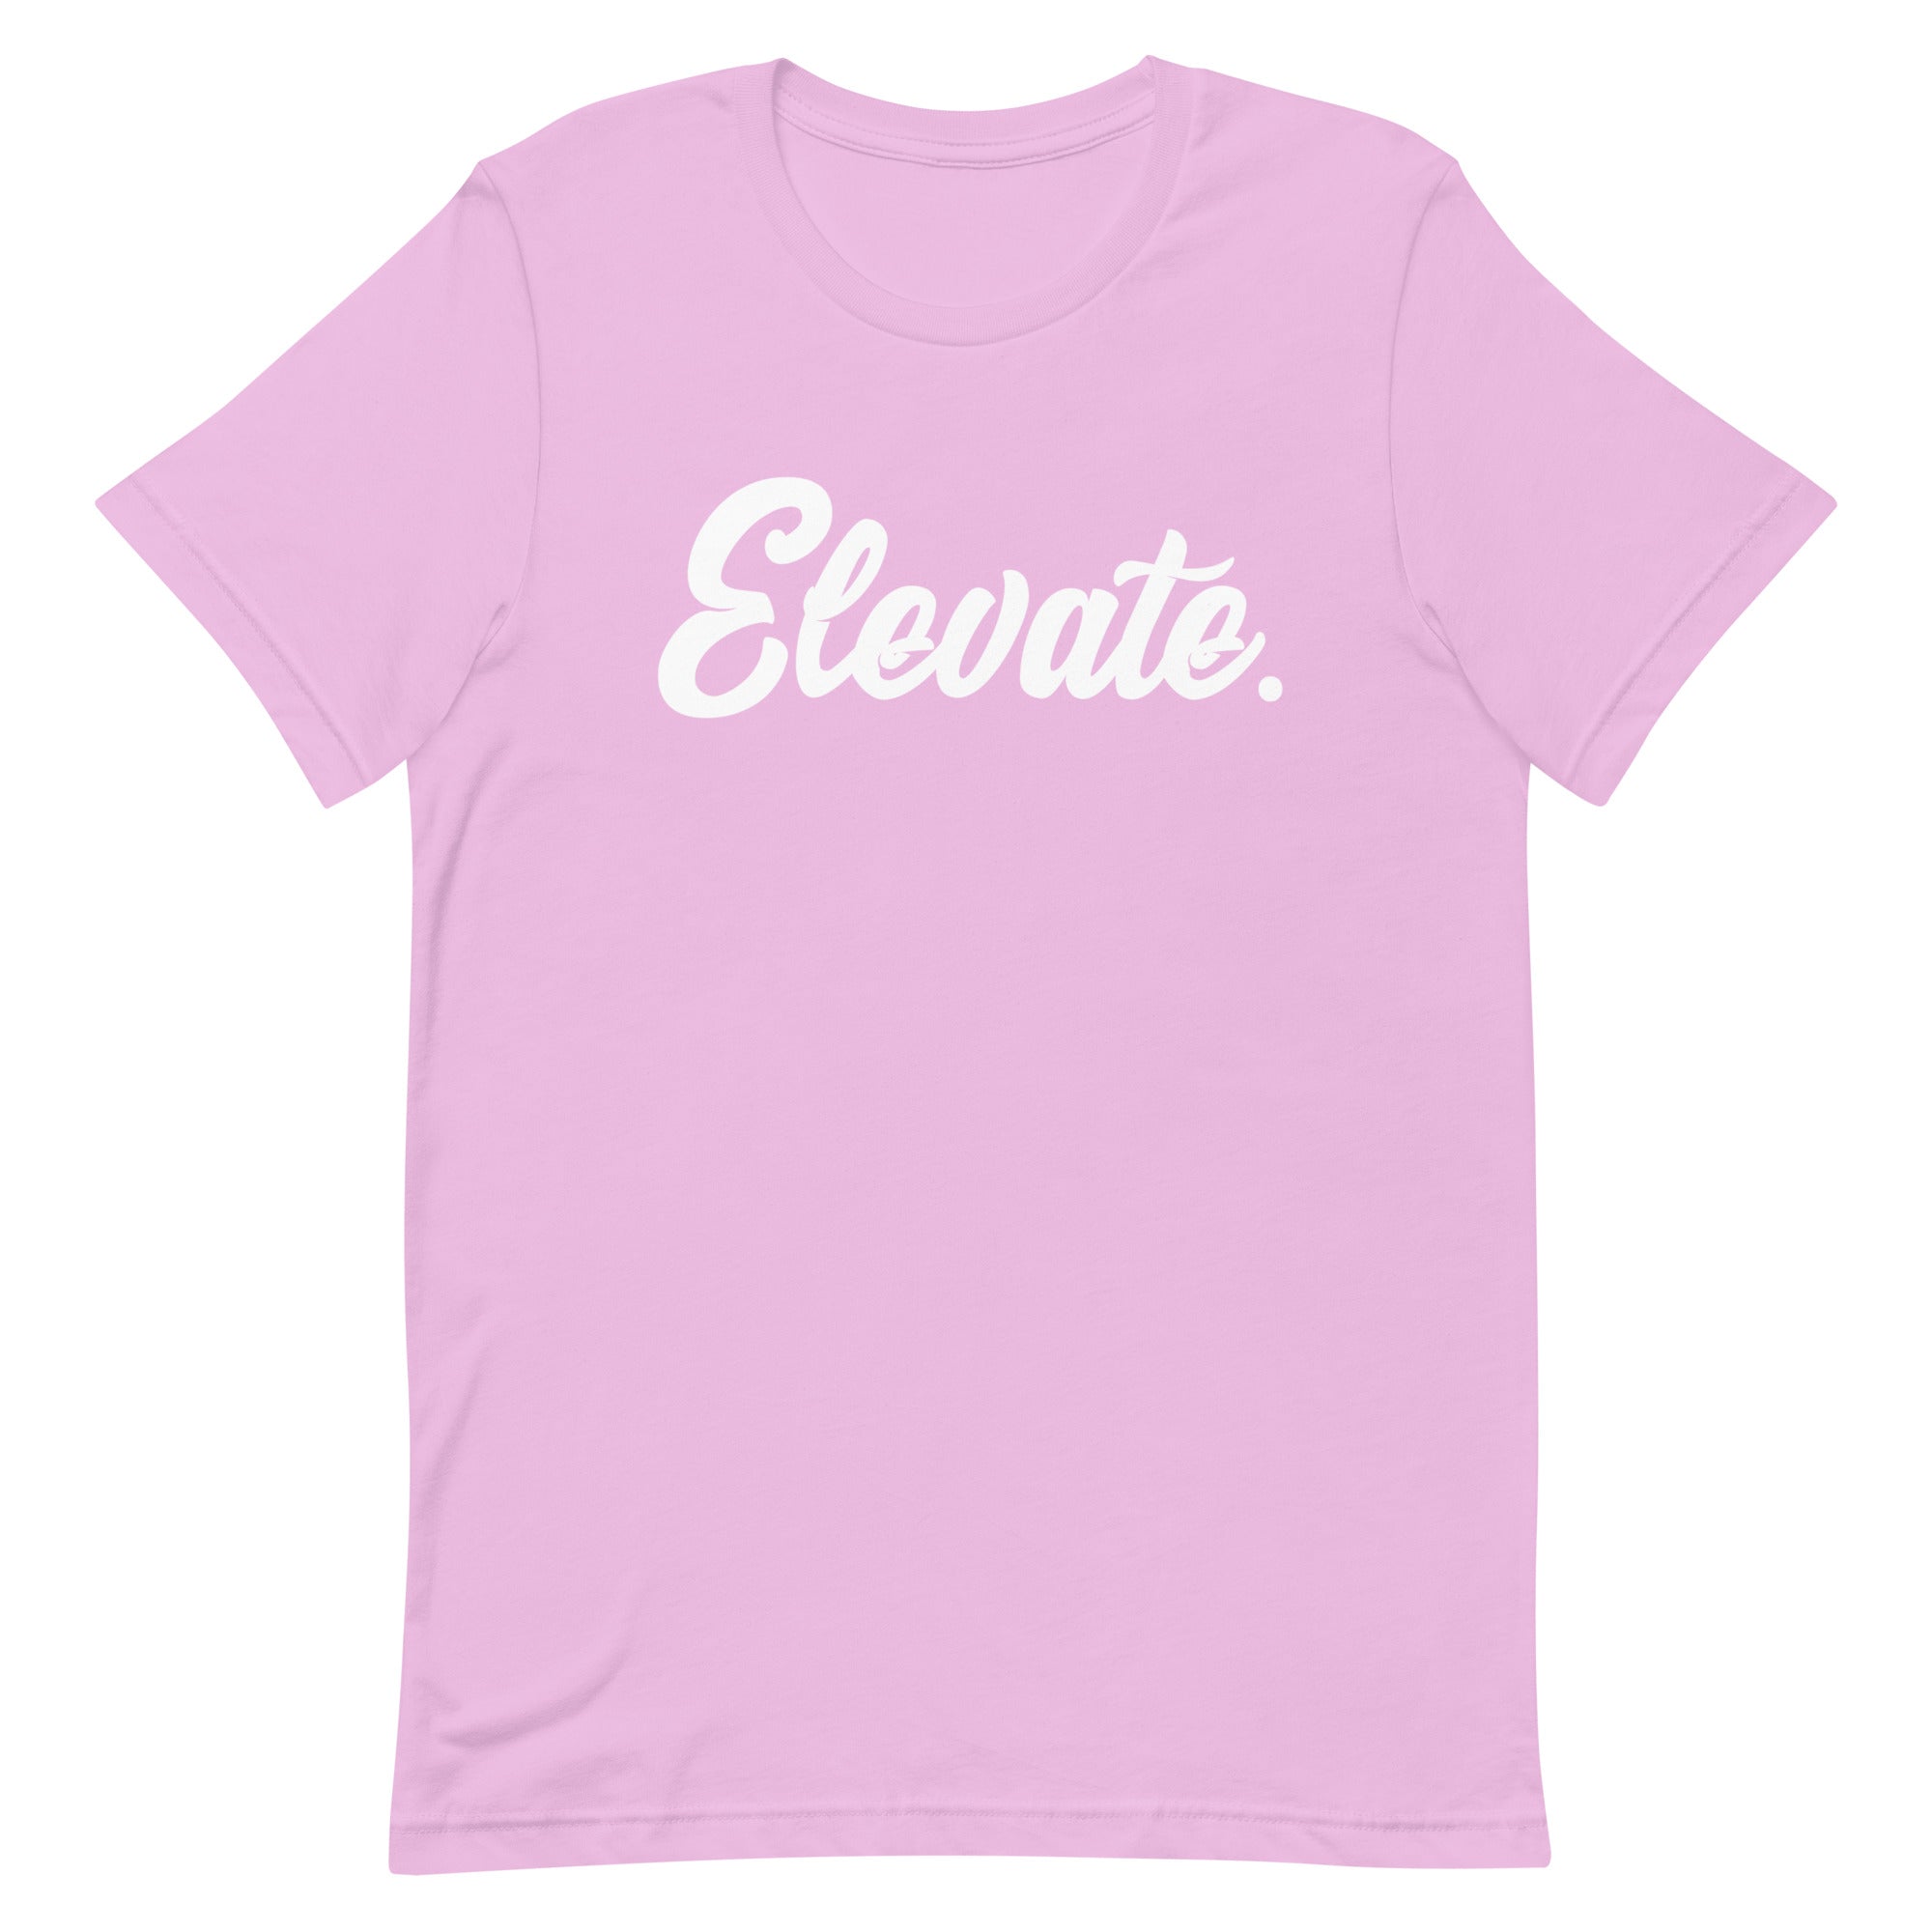 Elevate t-shirt